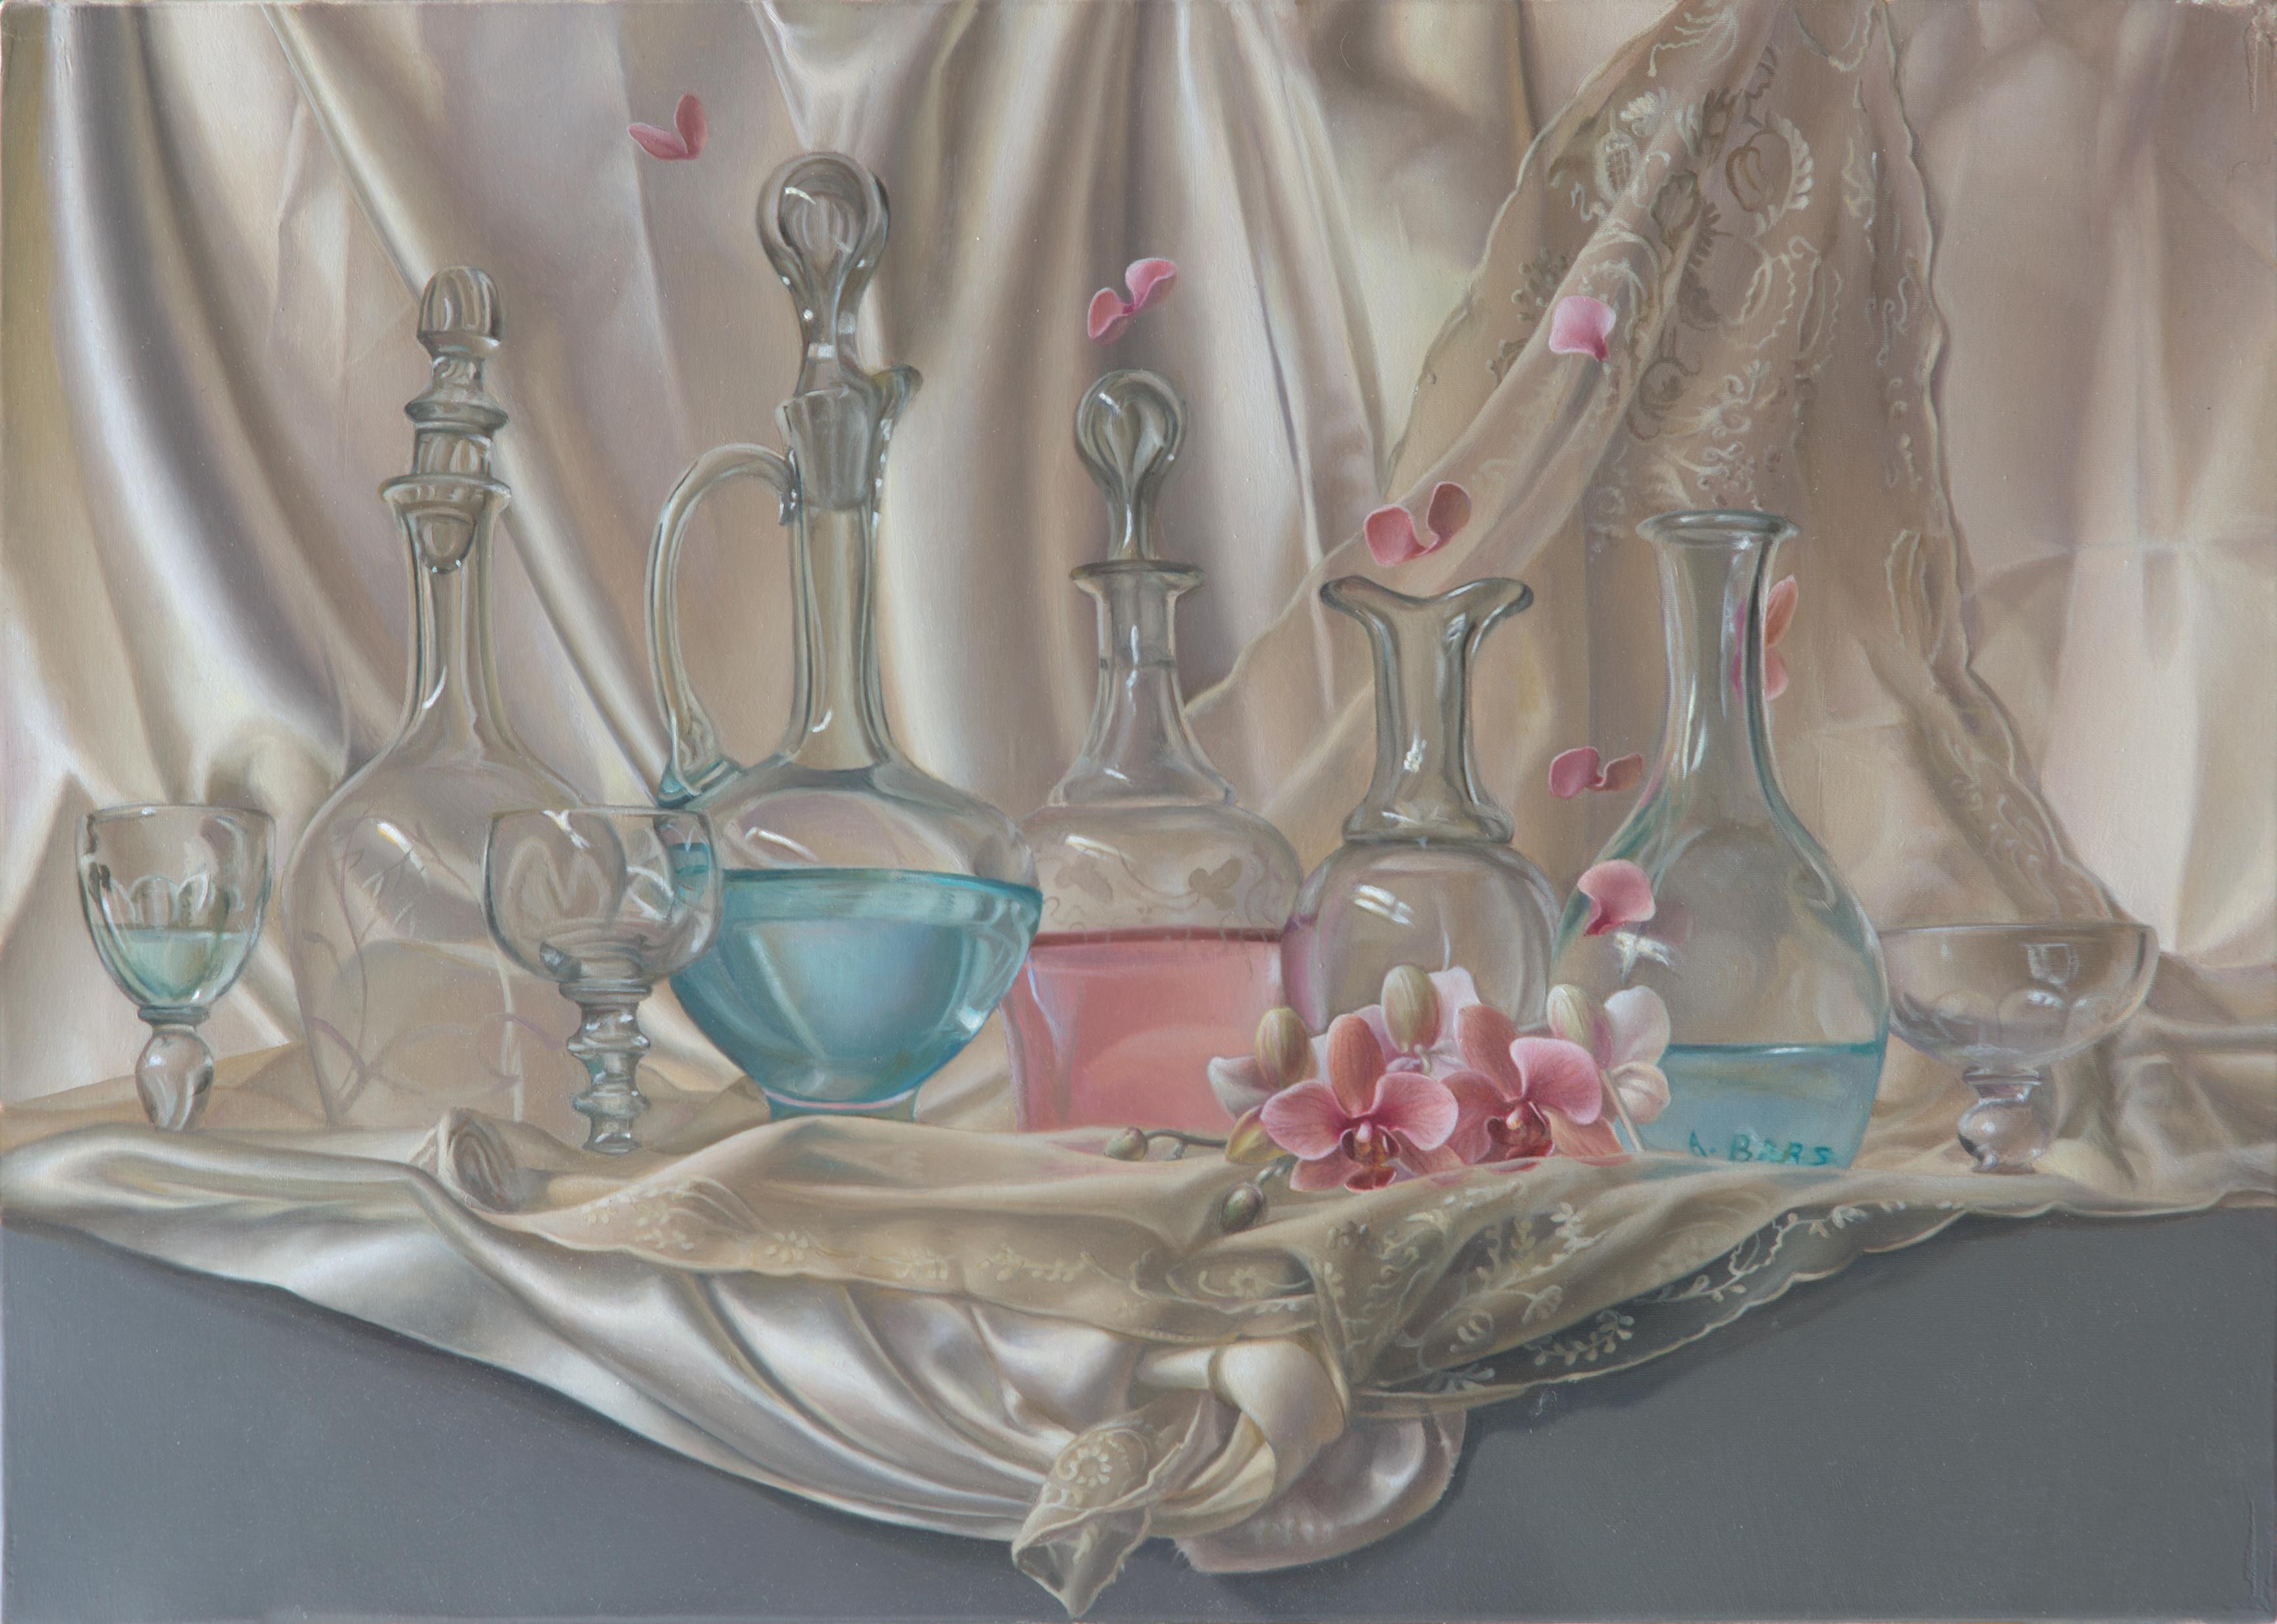 Andrée Bars Still-Life Painting - “Lightness”, Transparent Glassware on Satin Fabric Decor  Symbolist Oil Painting